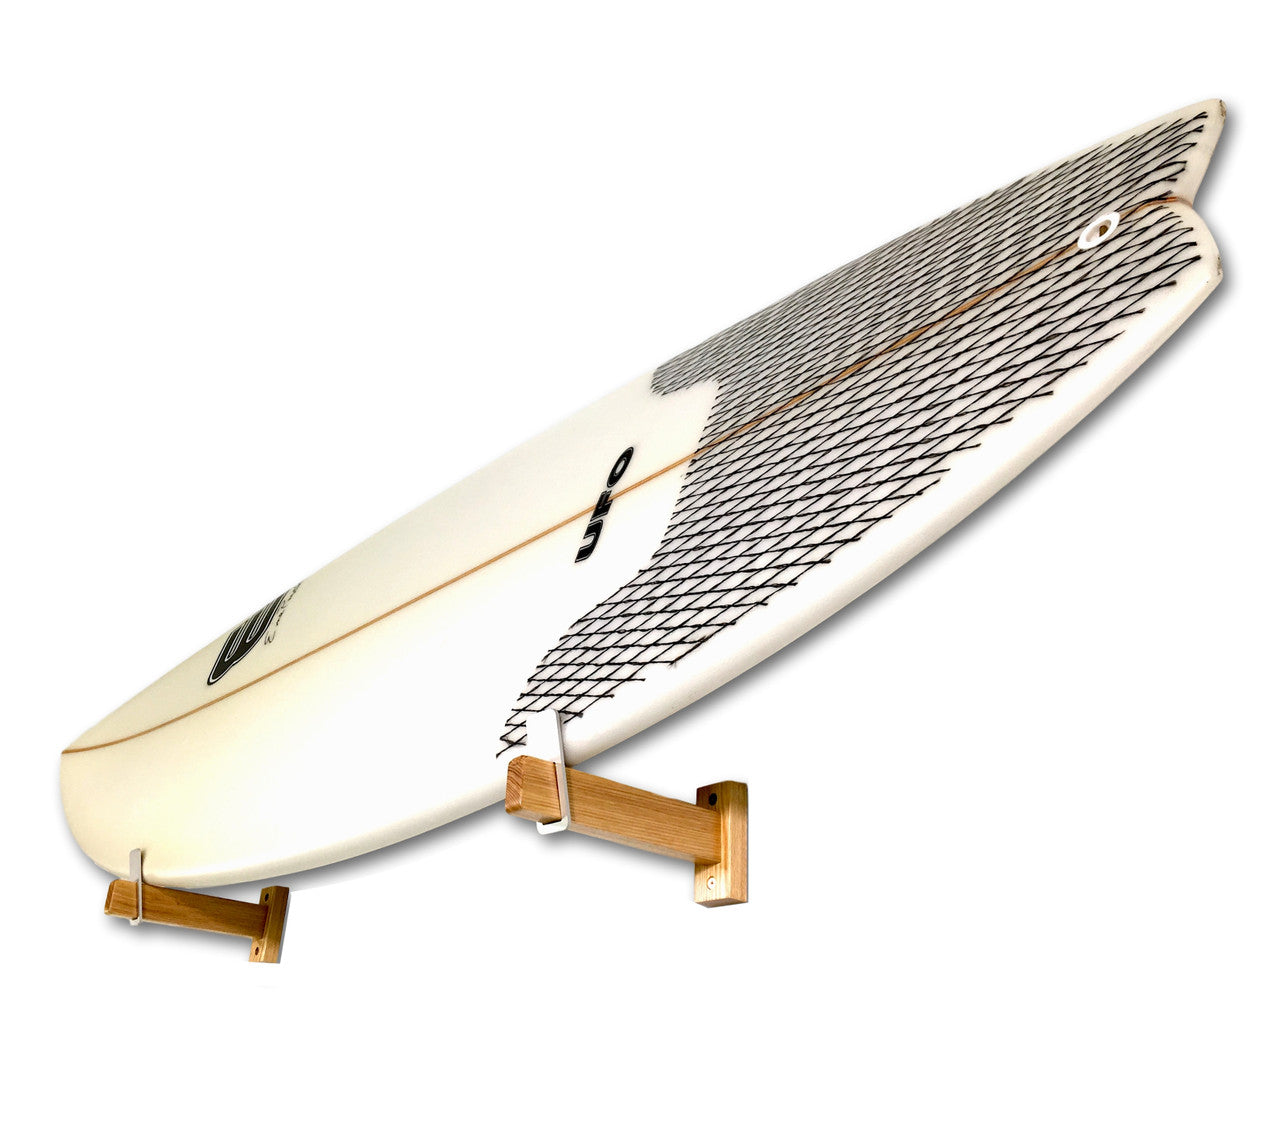 Surfboard Hanger | Storage and Display Rack FCS | StoreYourBoard